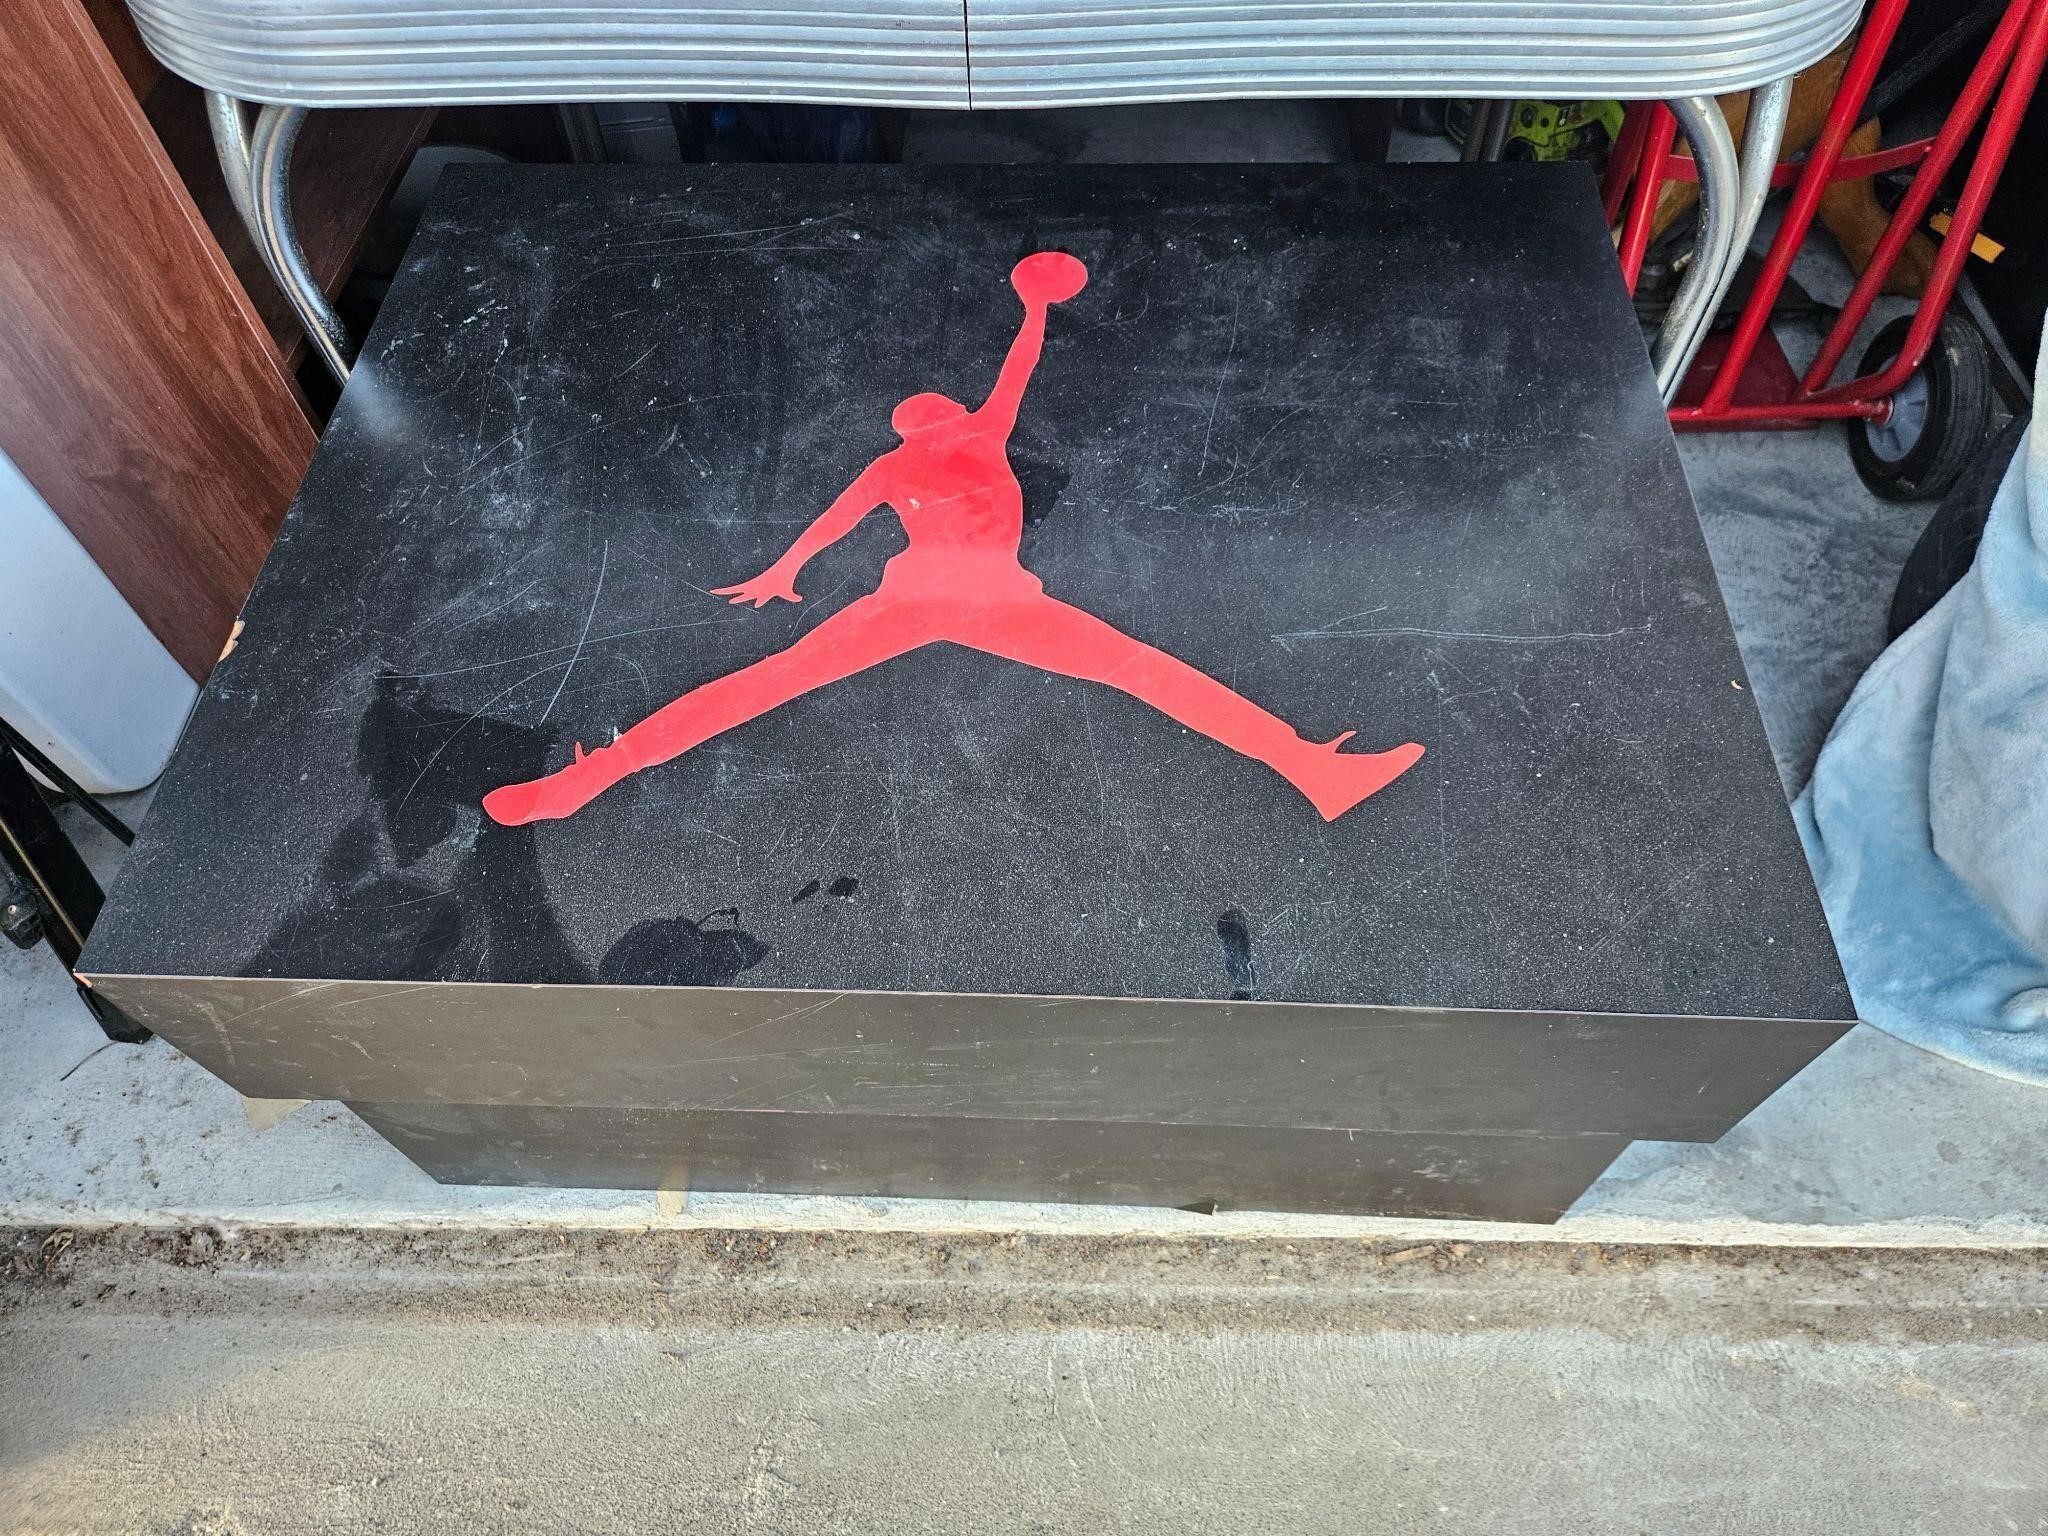 Large Nike Jordan Shoe Store Display